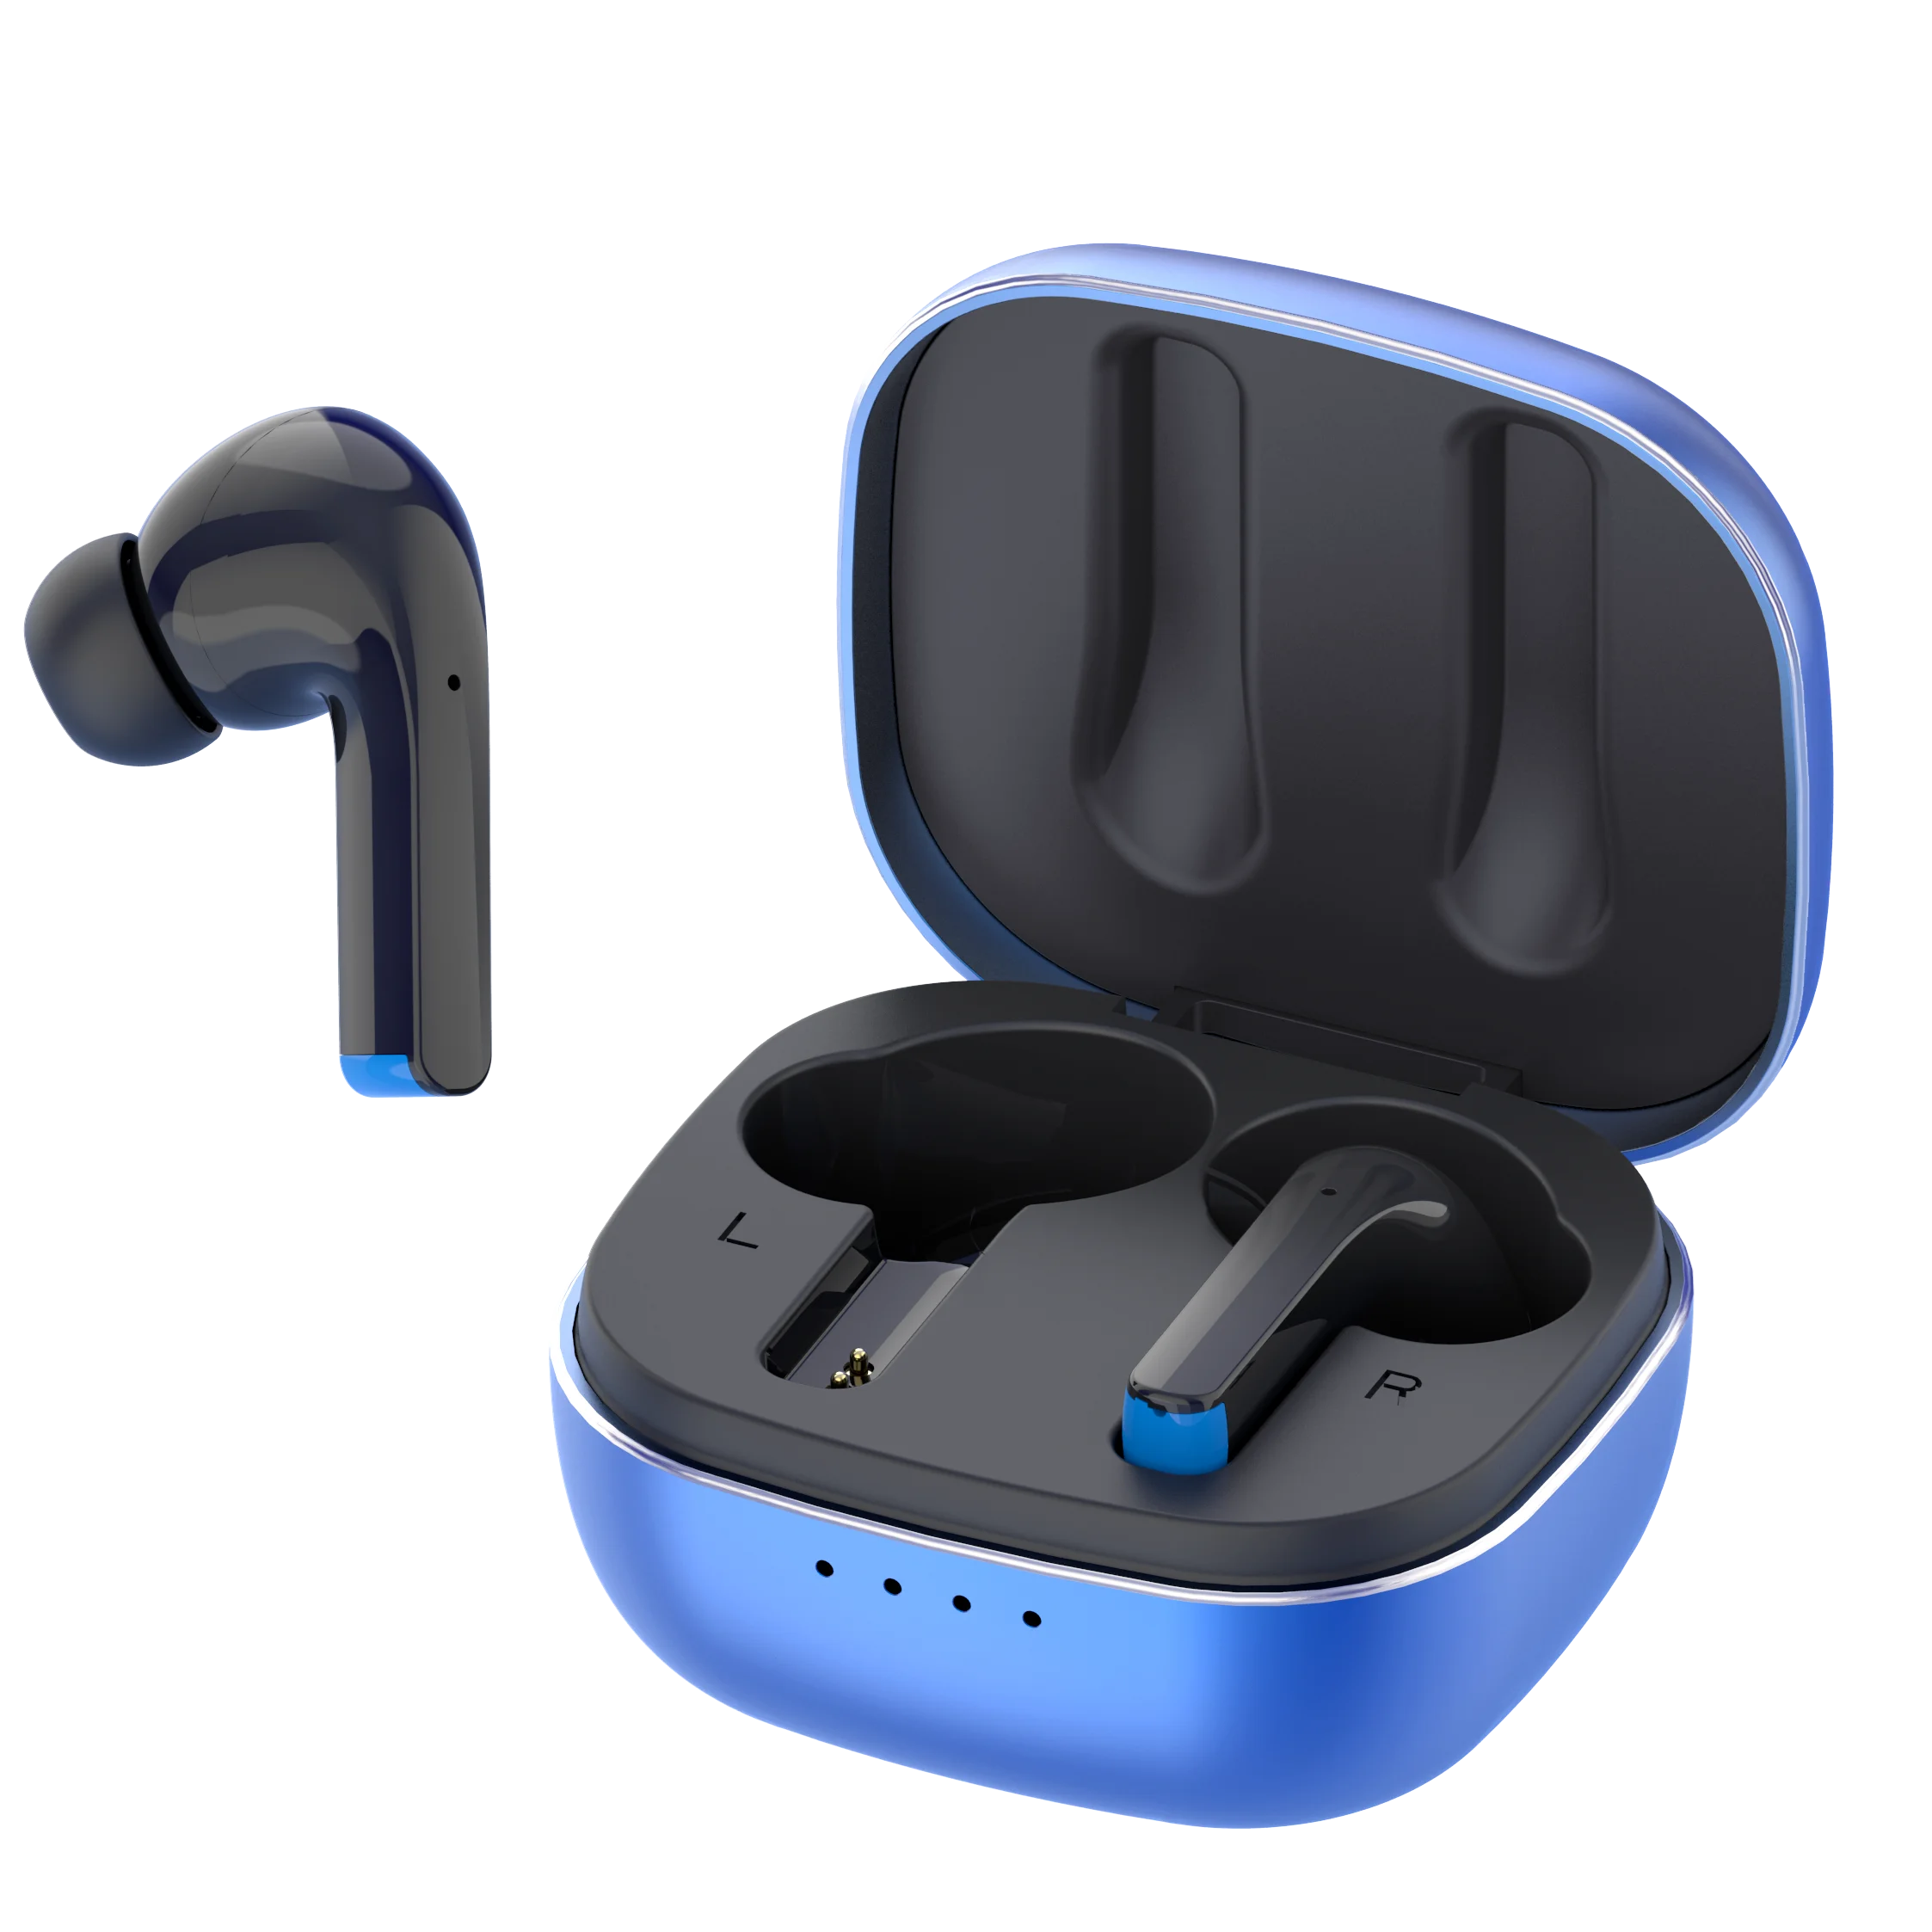 

OEM logo free sample amazon hot sell model 2020 new tws earbuds bluetooth 5.0